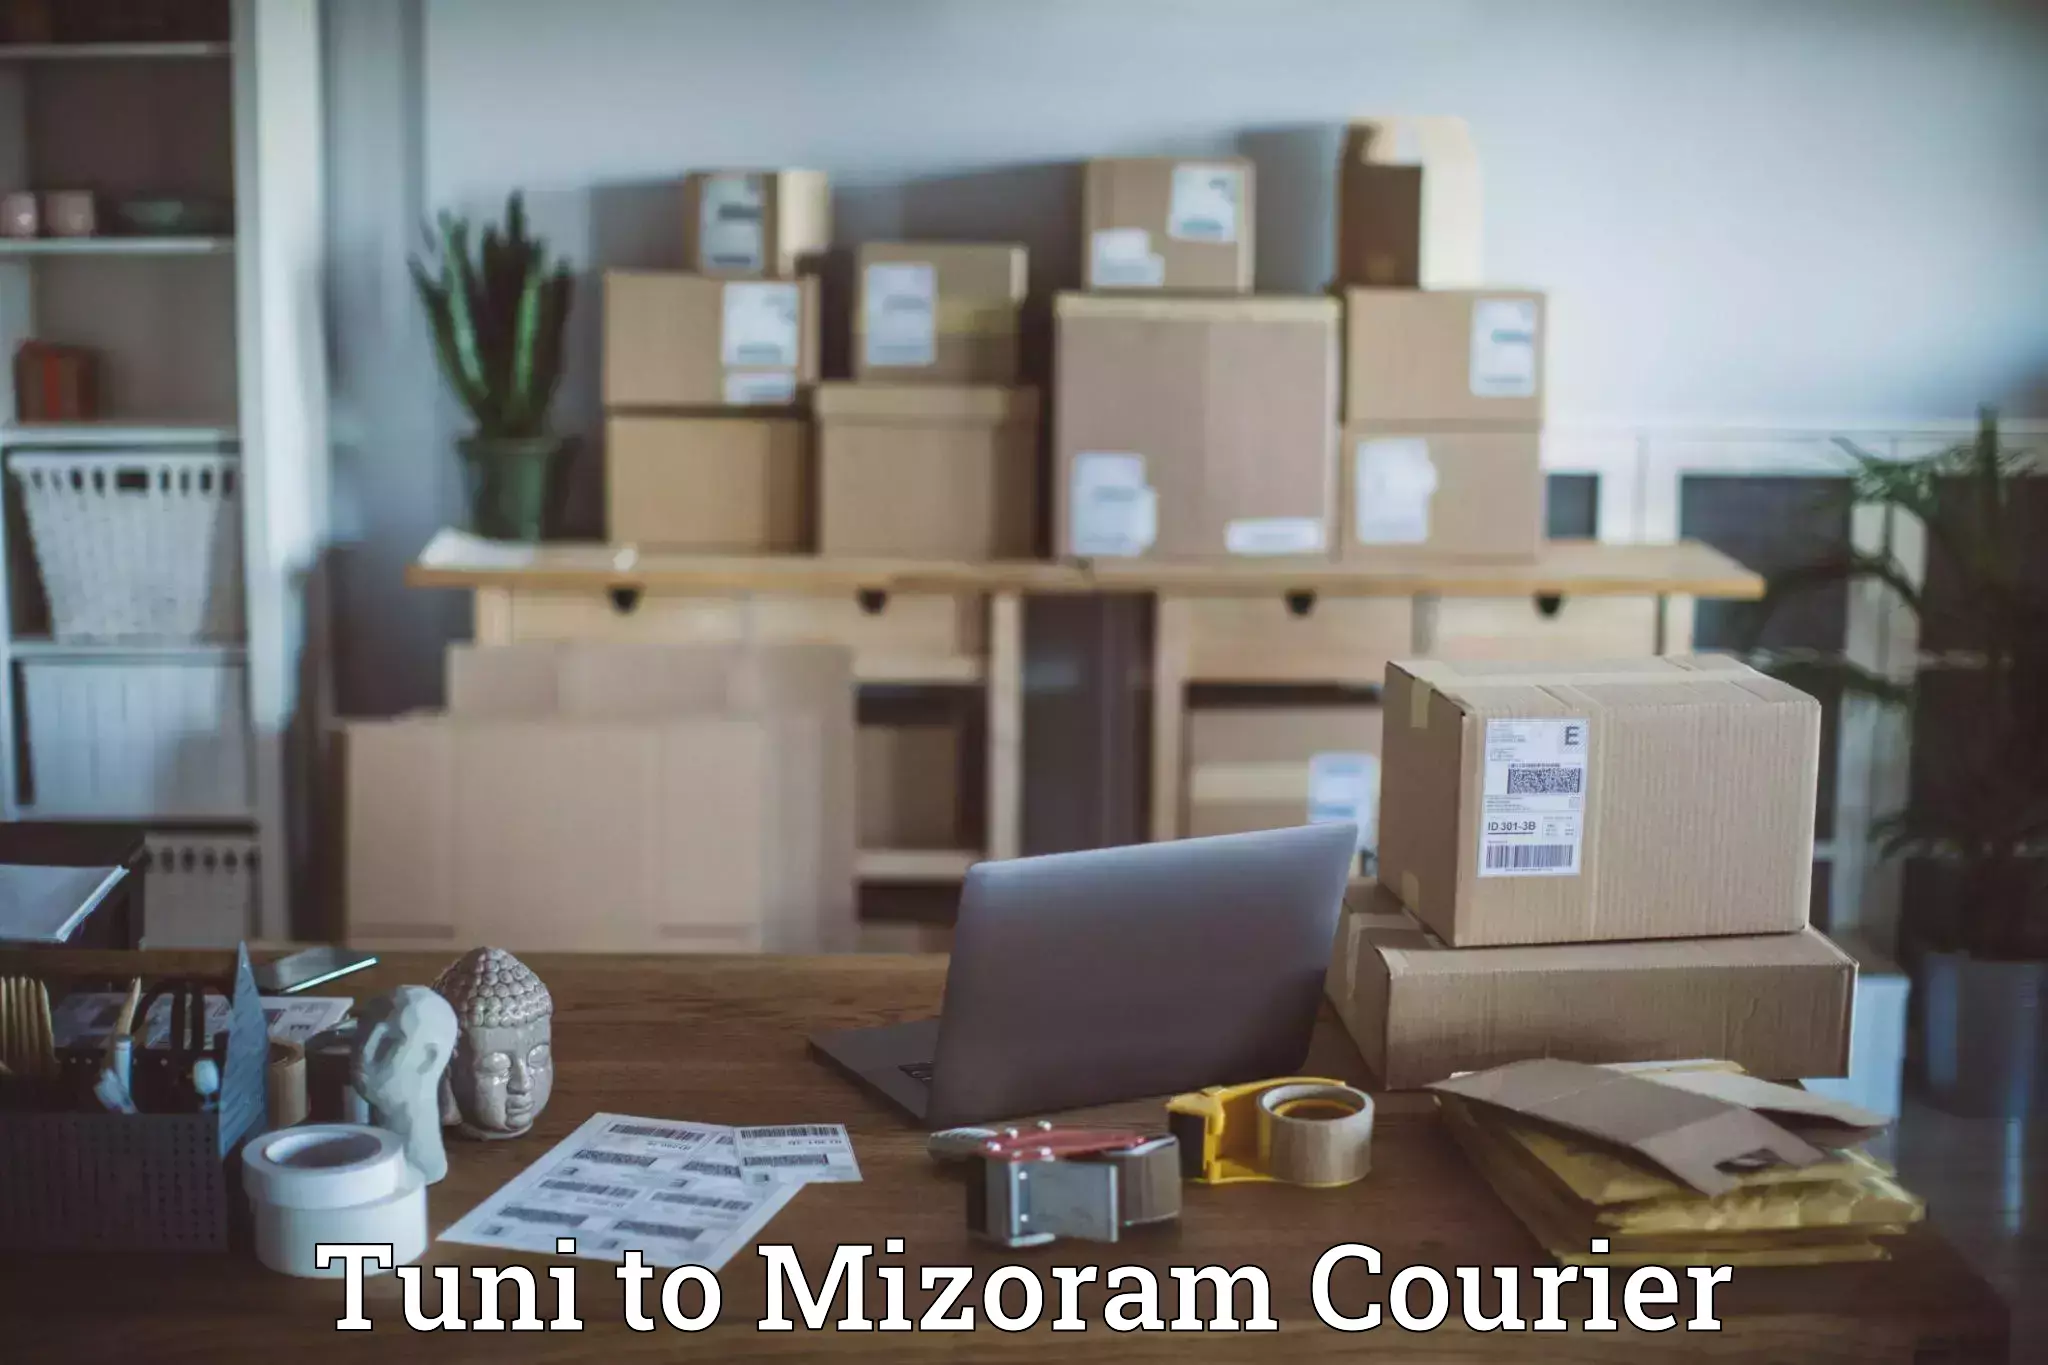 24-hour courier service Tuni to Mizoram